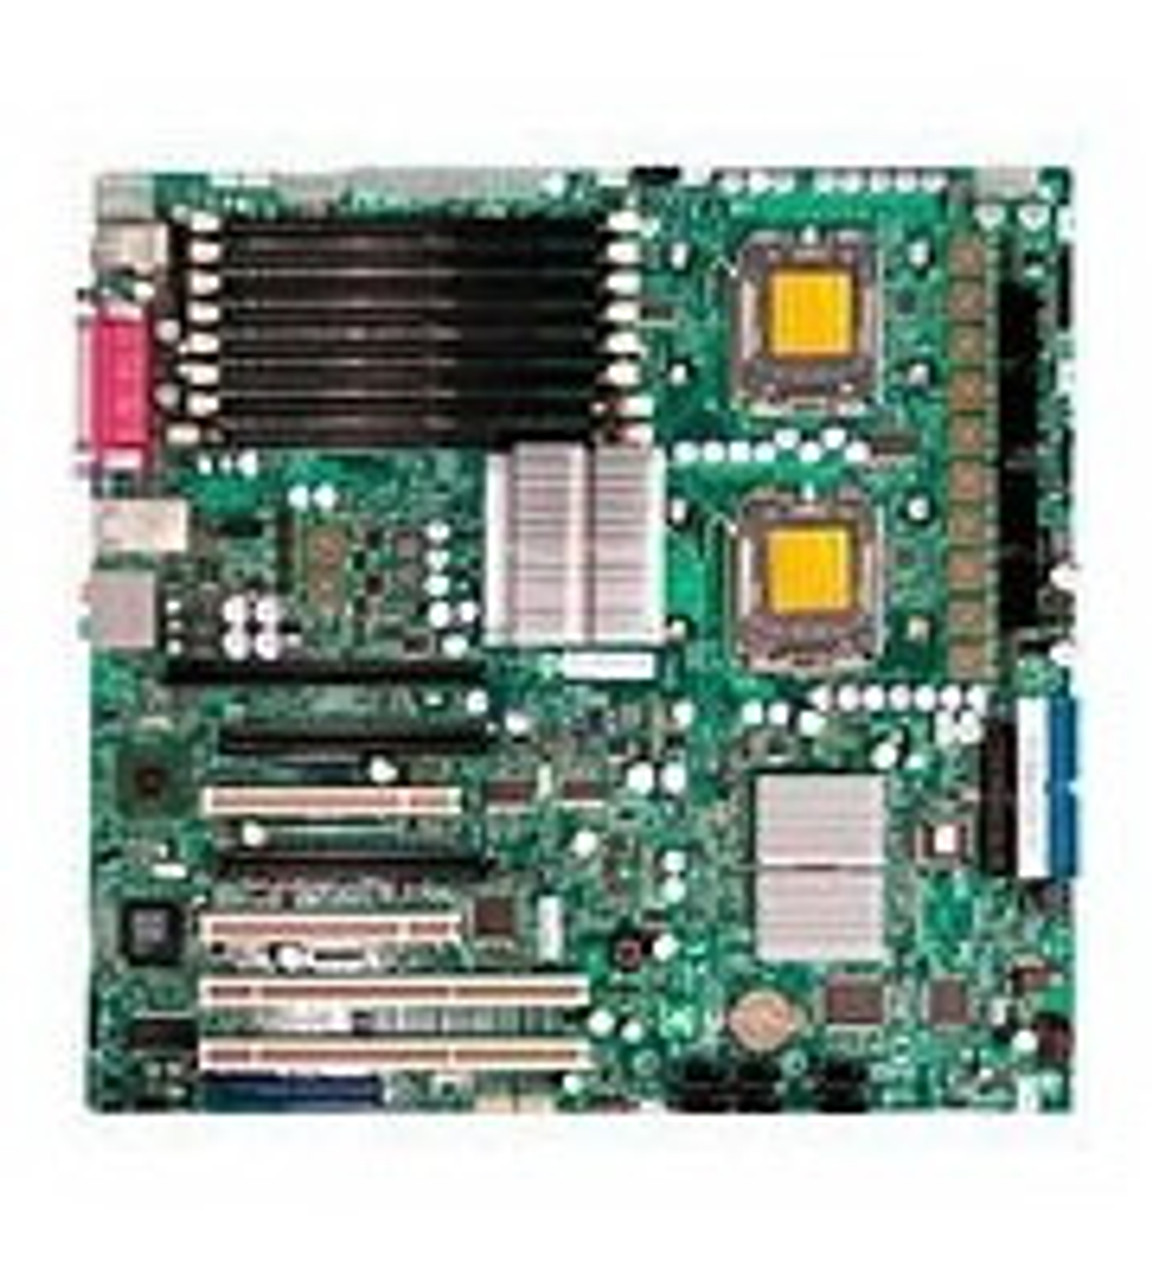 MBD-X7DWA-N-O SuperMicro X7DWA-N Socket LGA771 Intel 5400 (Seaburg) Chipset Extended ATX Server Motherboard (Refurbished)